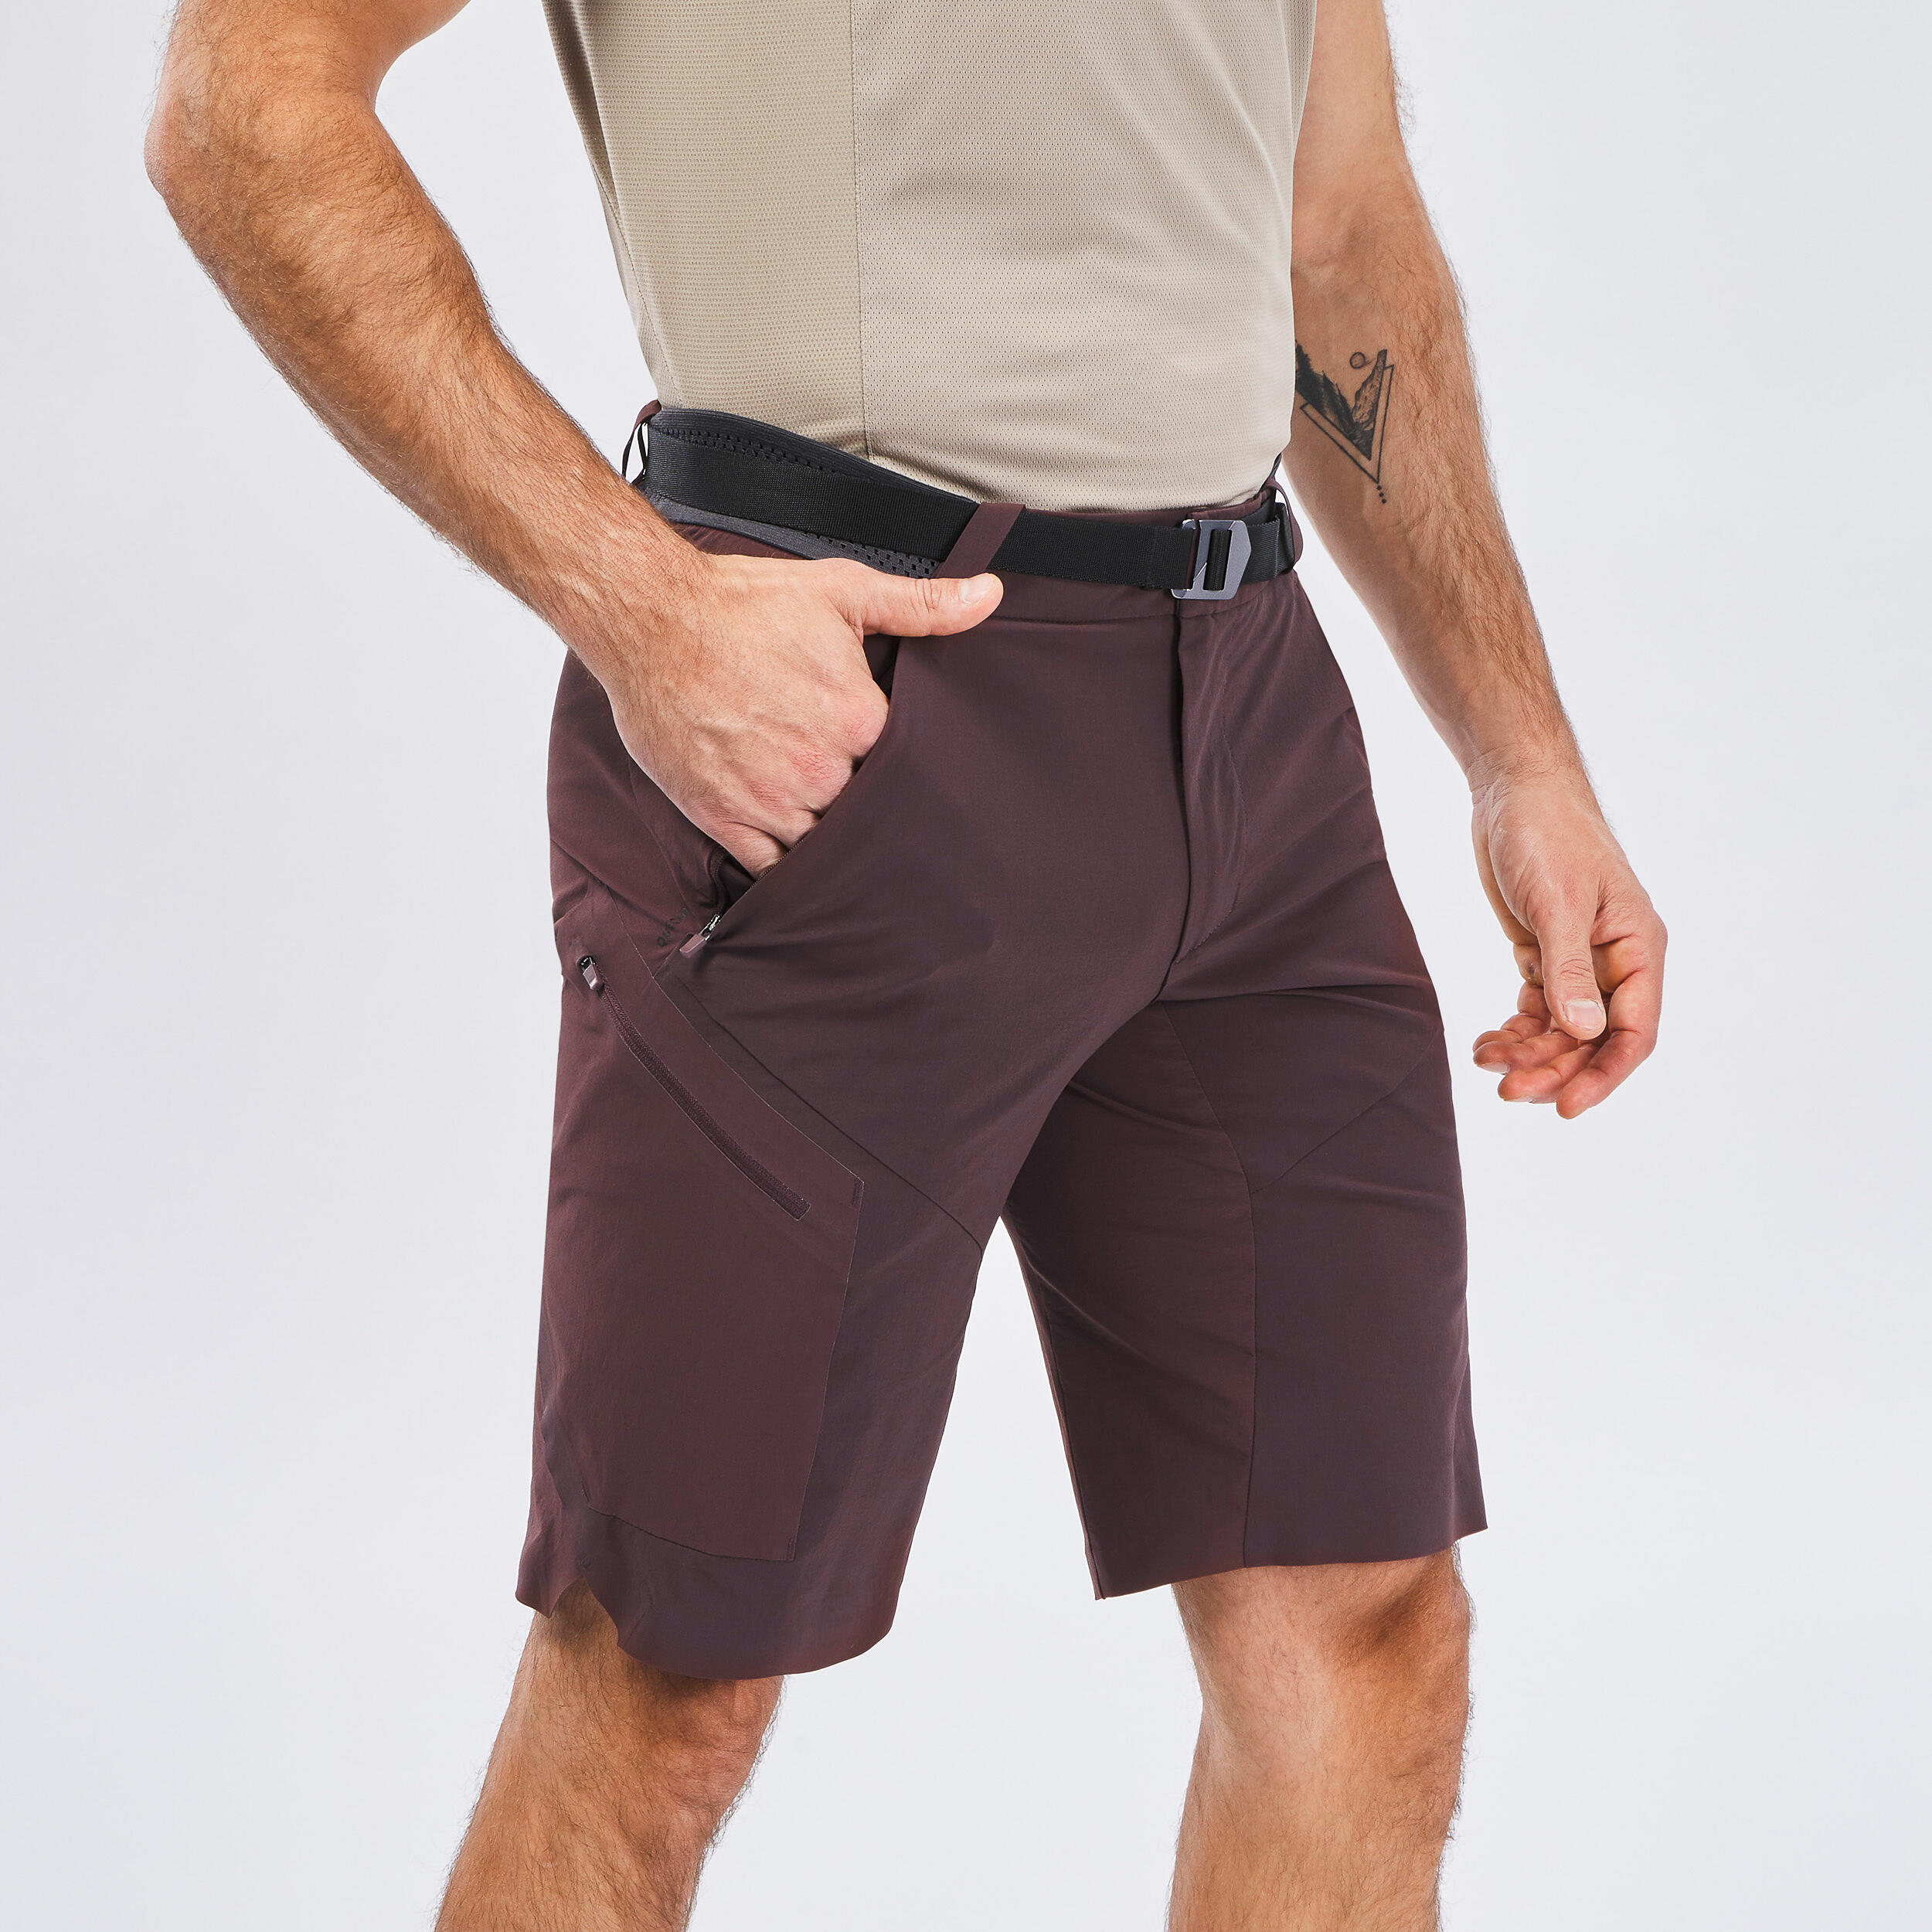 Men's Hiking Long Shorts - MH500 4/4